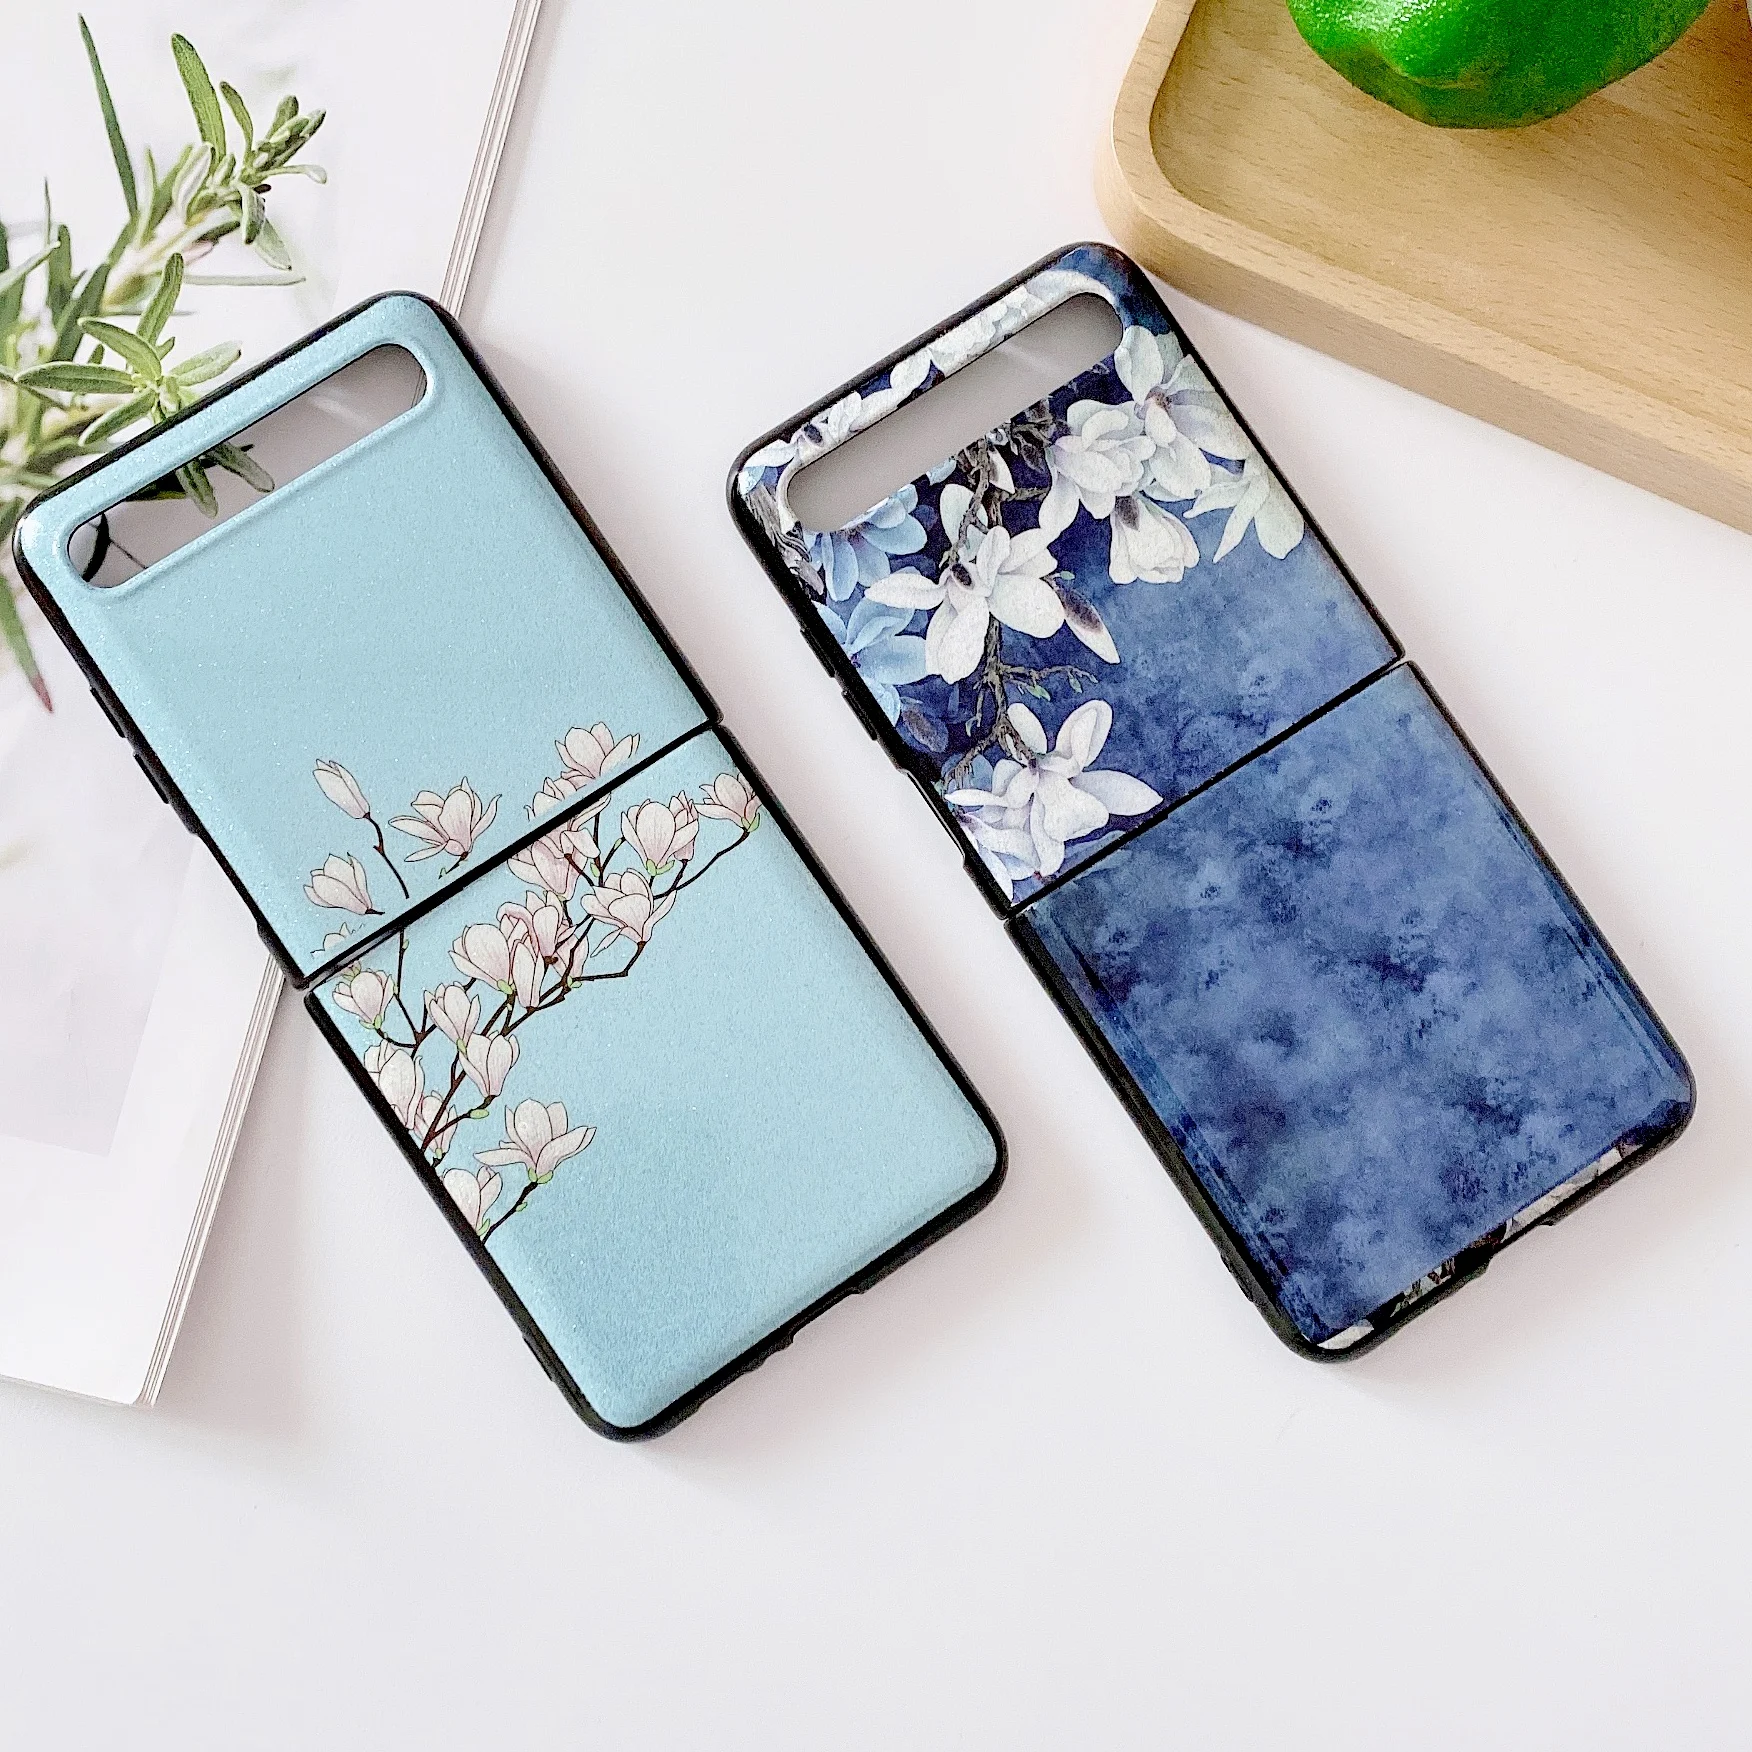 Pro-new flowers are suitable for Samsung galaxy z flip phone case z flip folding case F7000 anti-drop phone bag